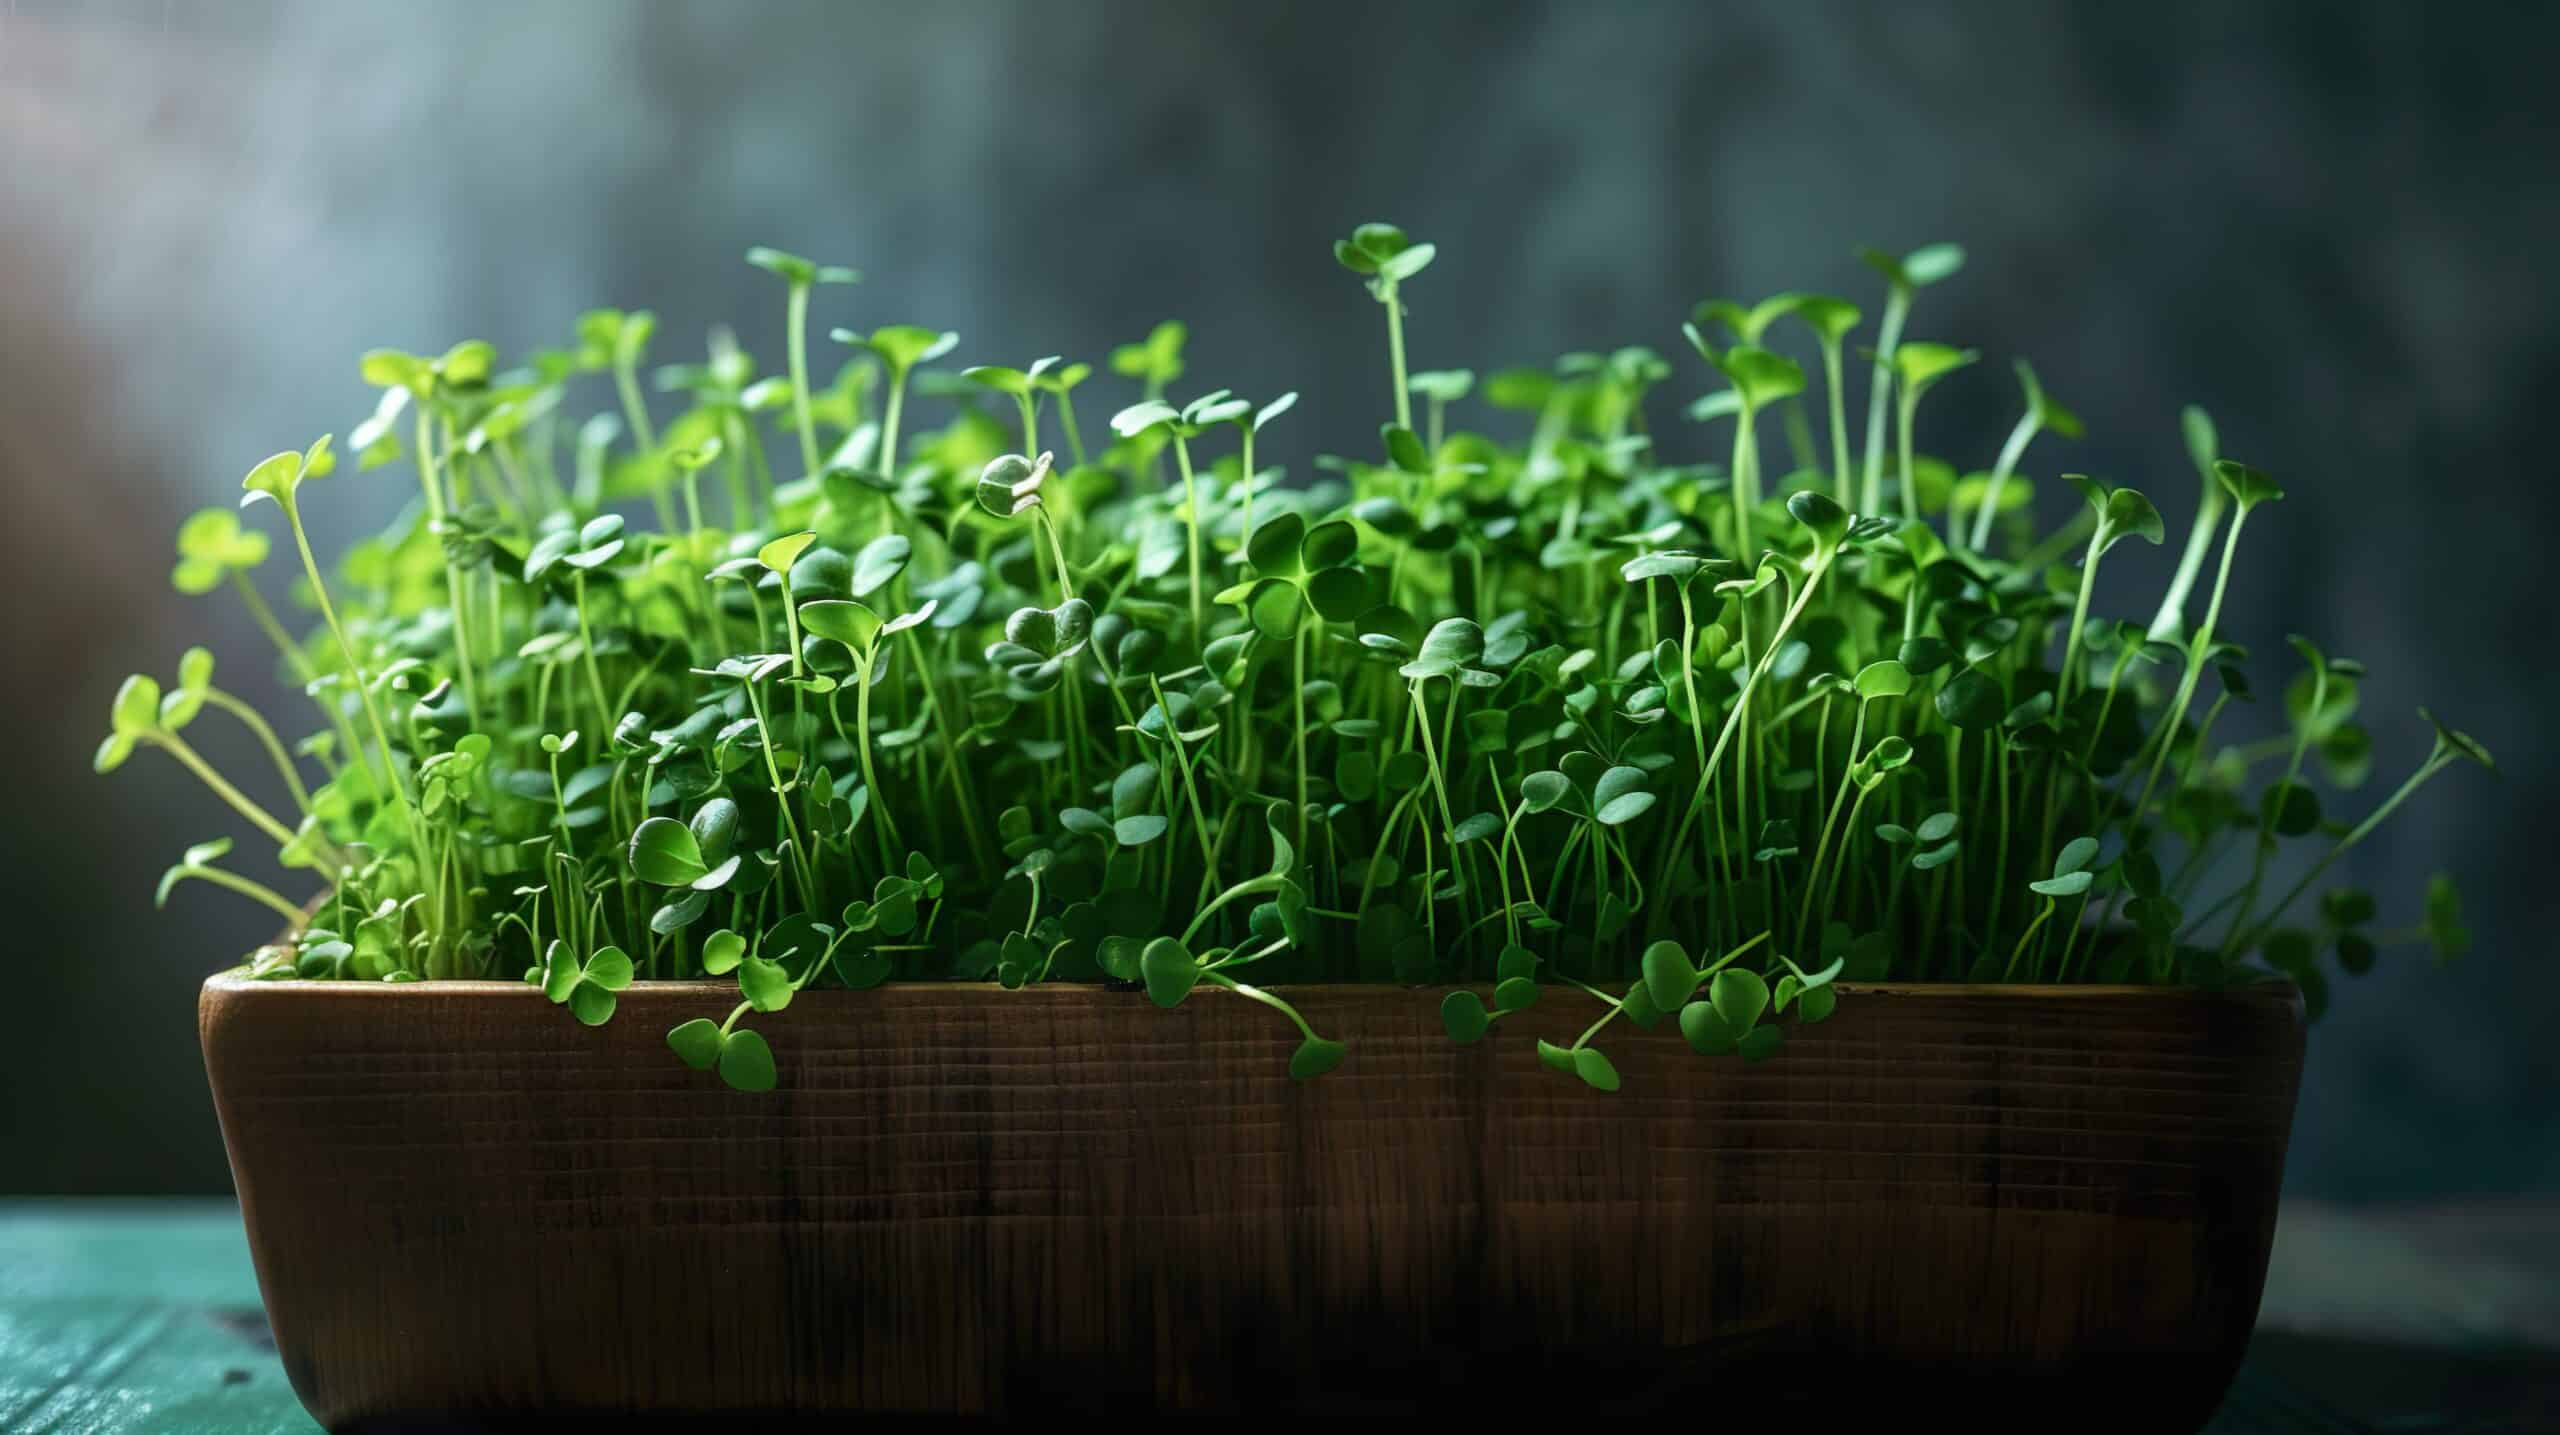 growmyownhealthfood.com : Which microgreens are not edible?